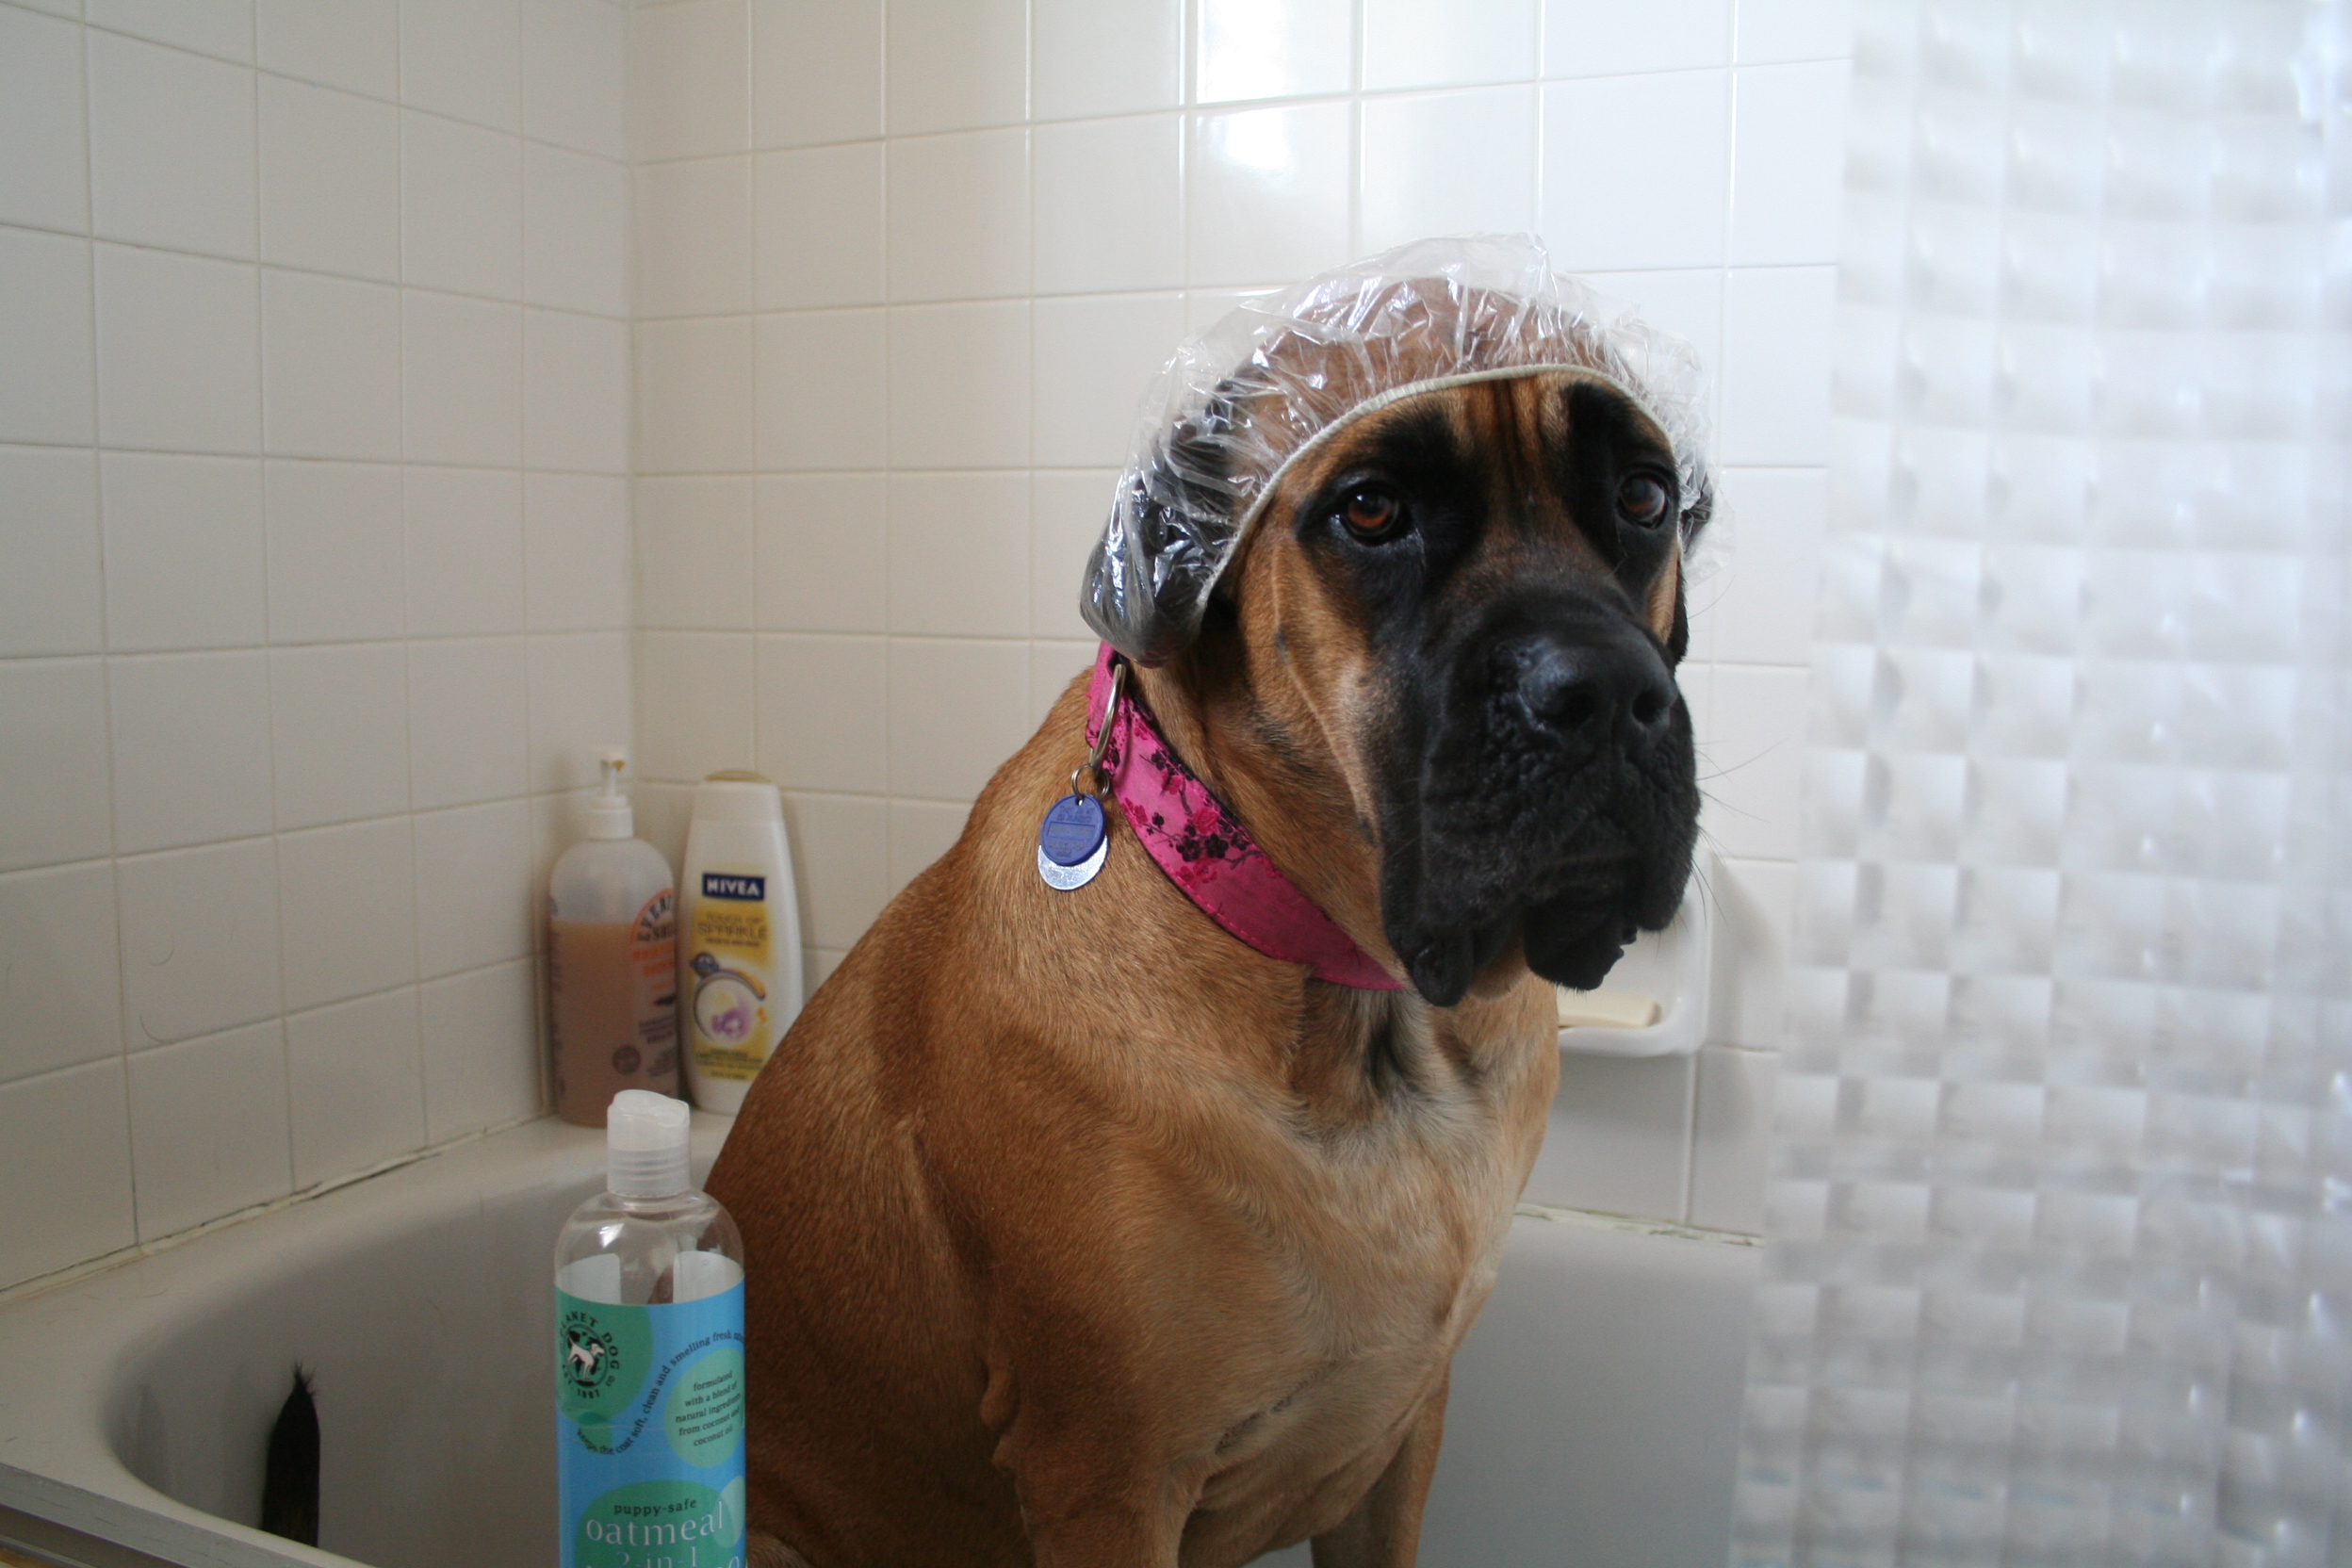 Bull MAstiff wearing a shower cap in the shower bath